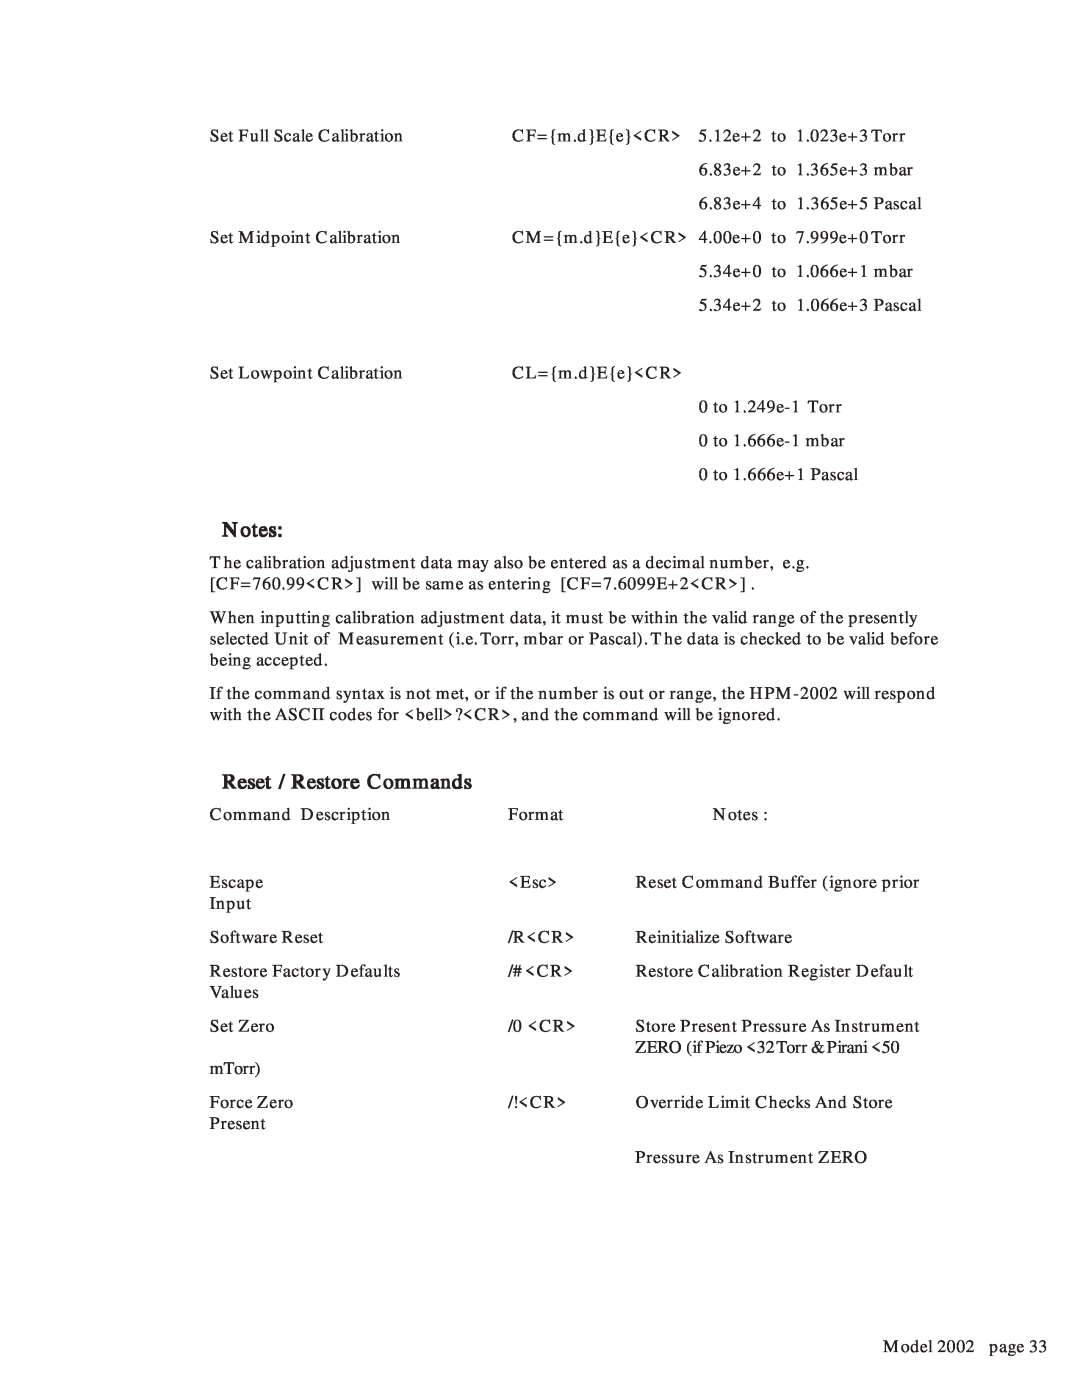 Teledyne 2002 instruction manual Reset / Restore Commands 